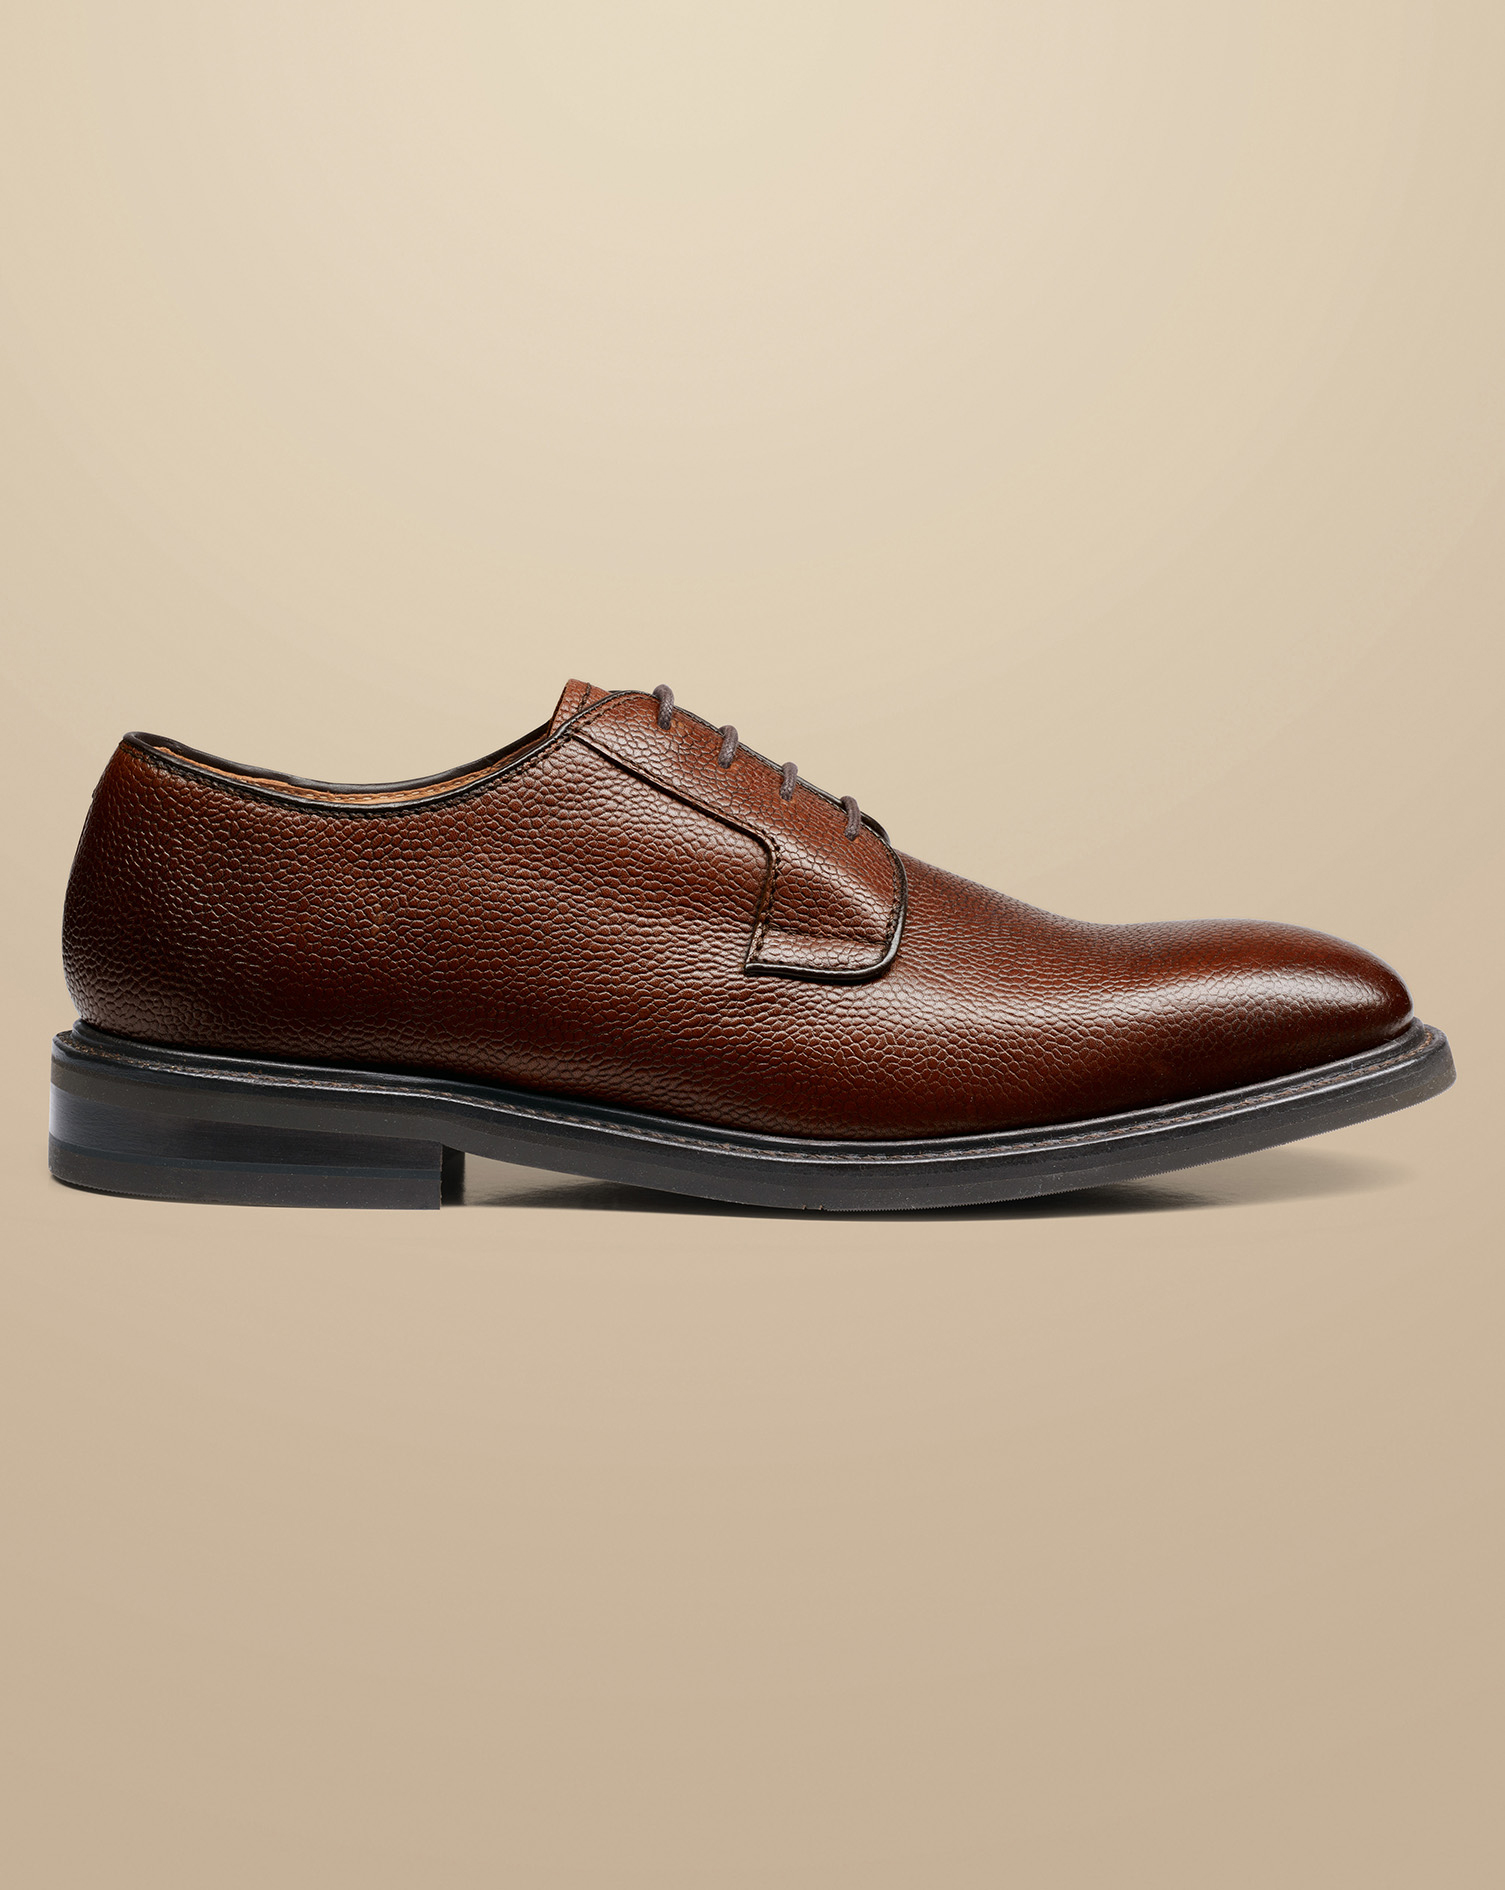 Men's Charles Tyrwhitt Grain Leather Derby Rubber Sole Shoe - Chestnut Brown Size 11
